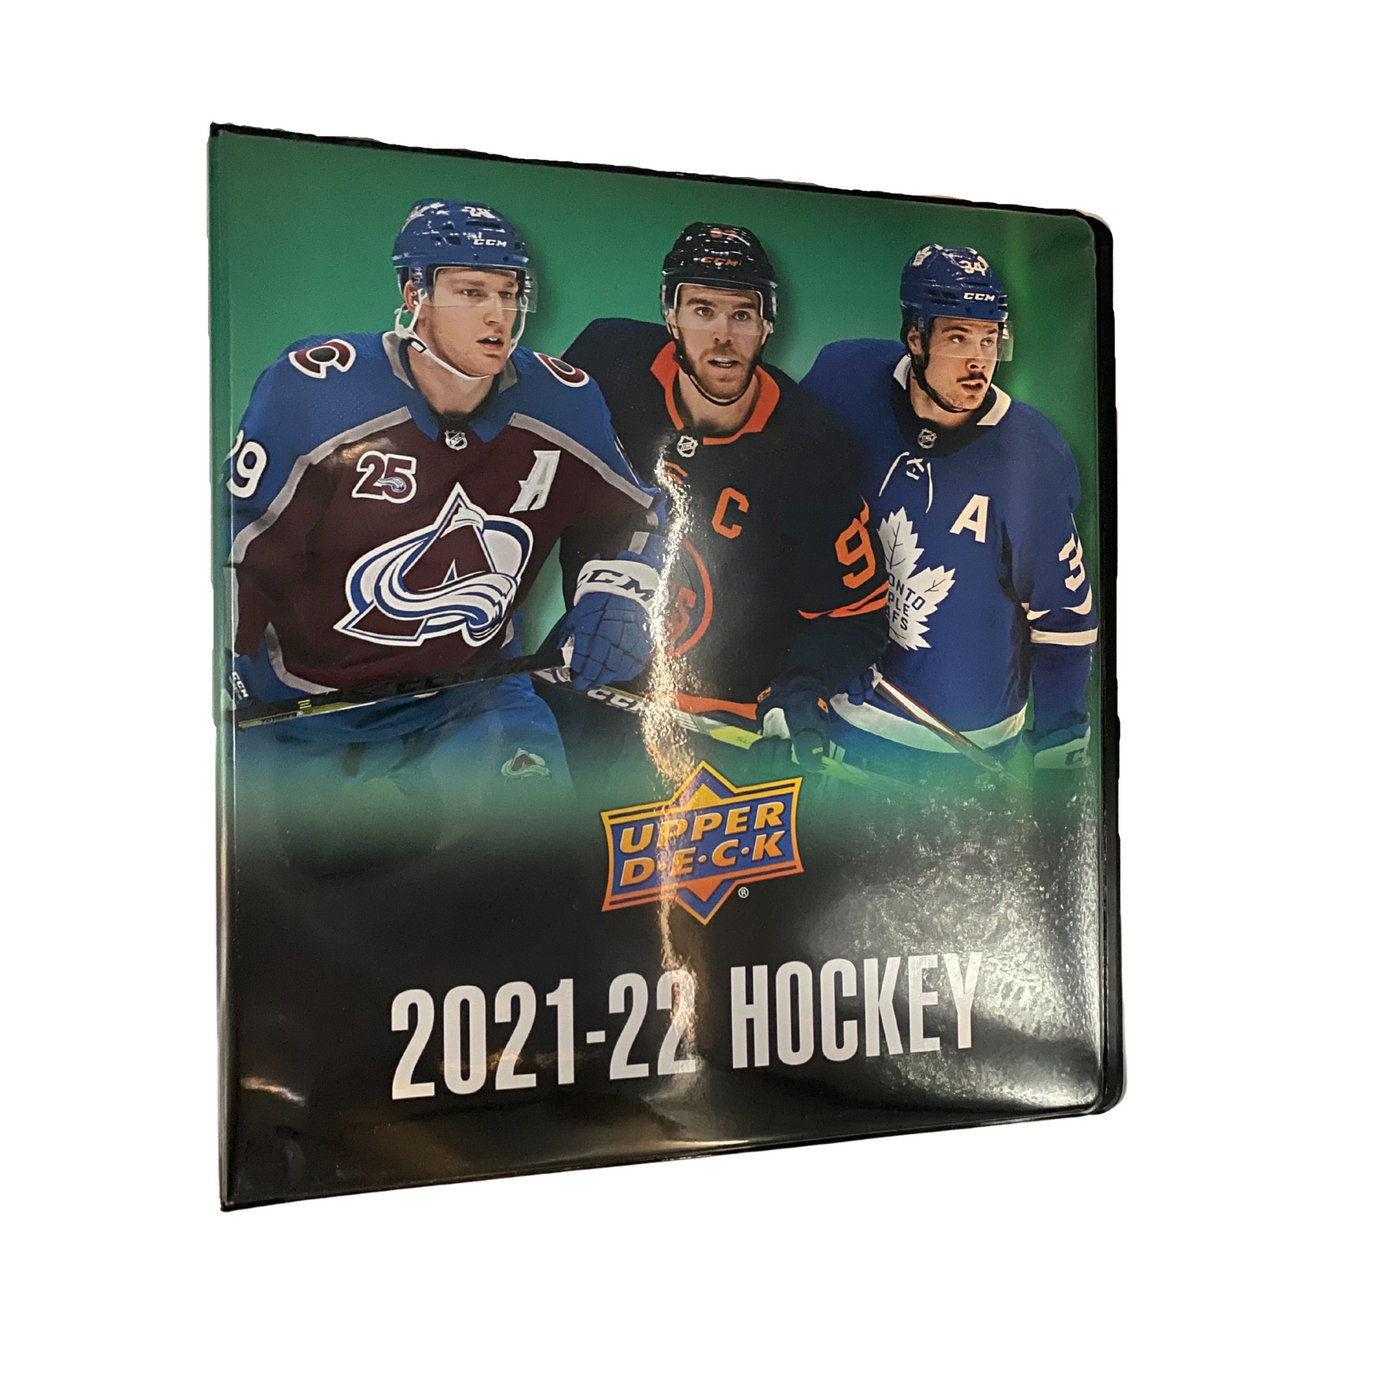 Cartable - Album pour cartes de hockey Upper Deck 2021-22